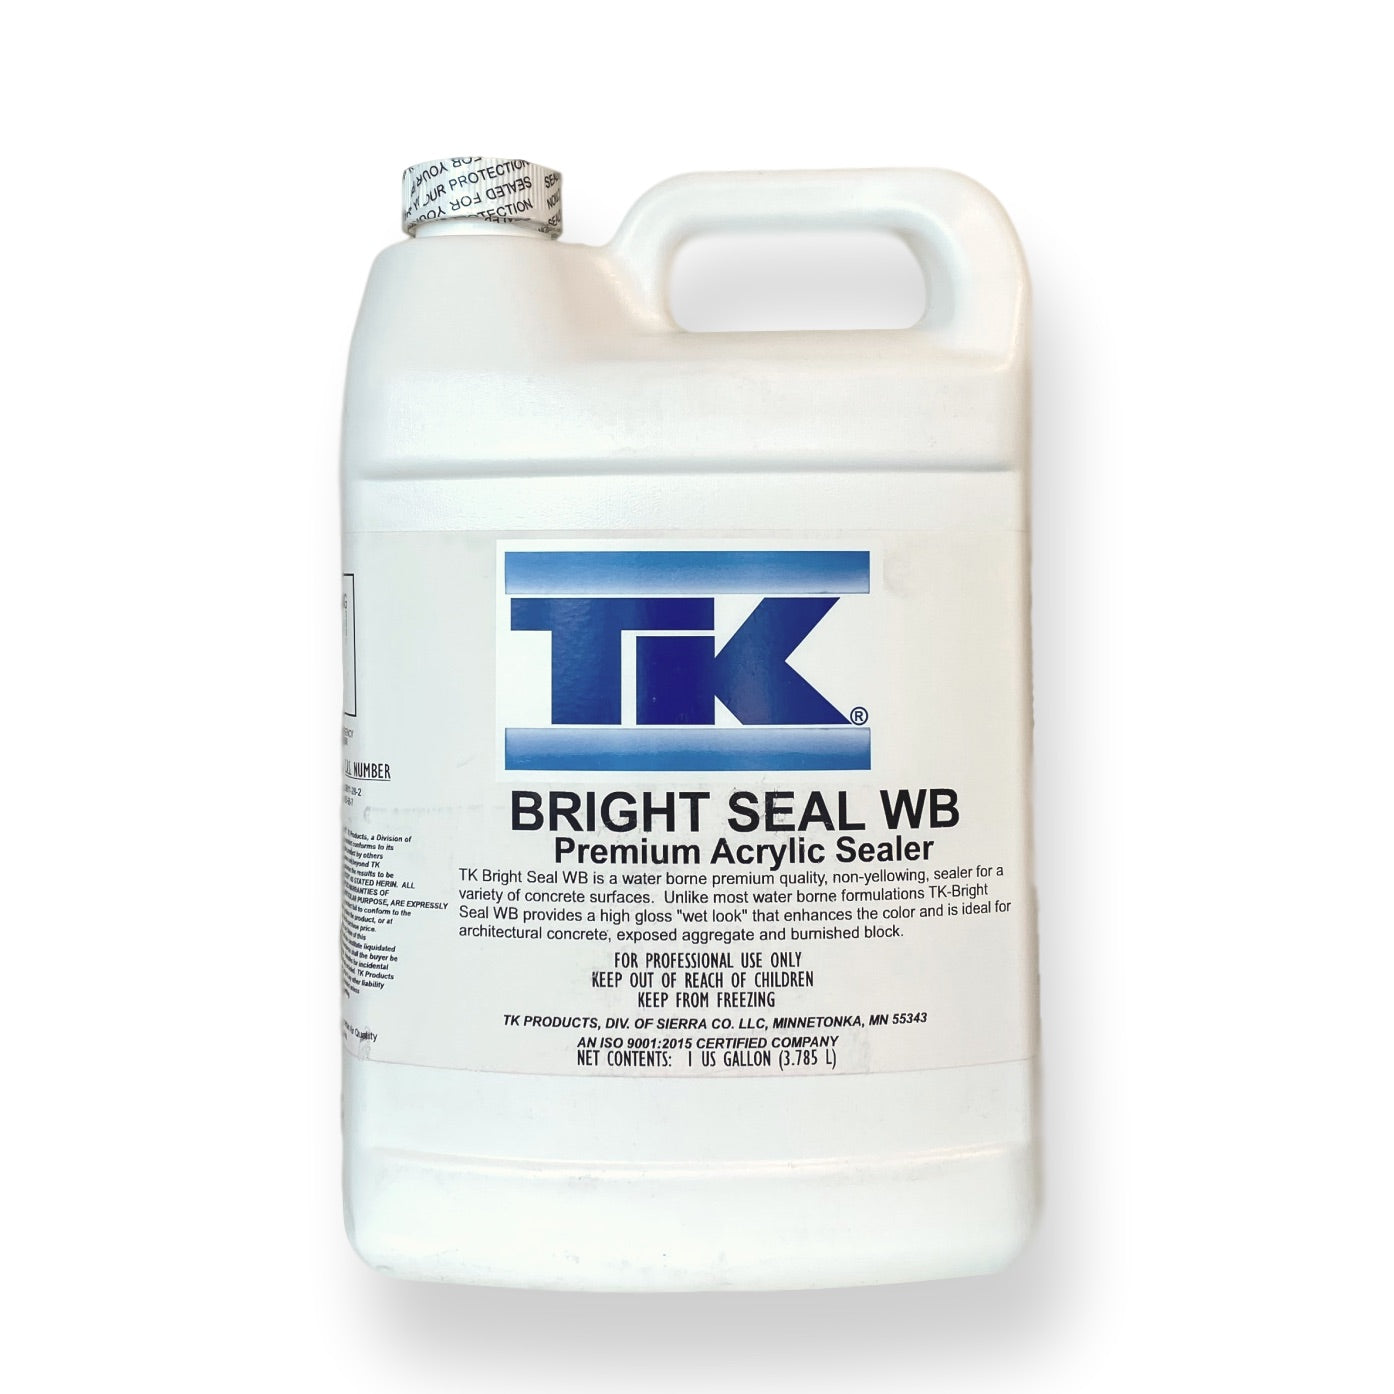 TK Products Bright Seal WB Premium Acrylic Concrete Sealer